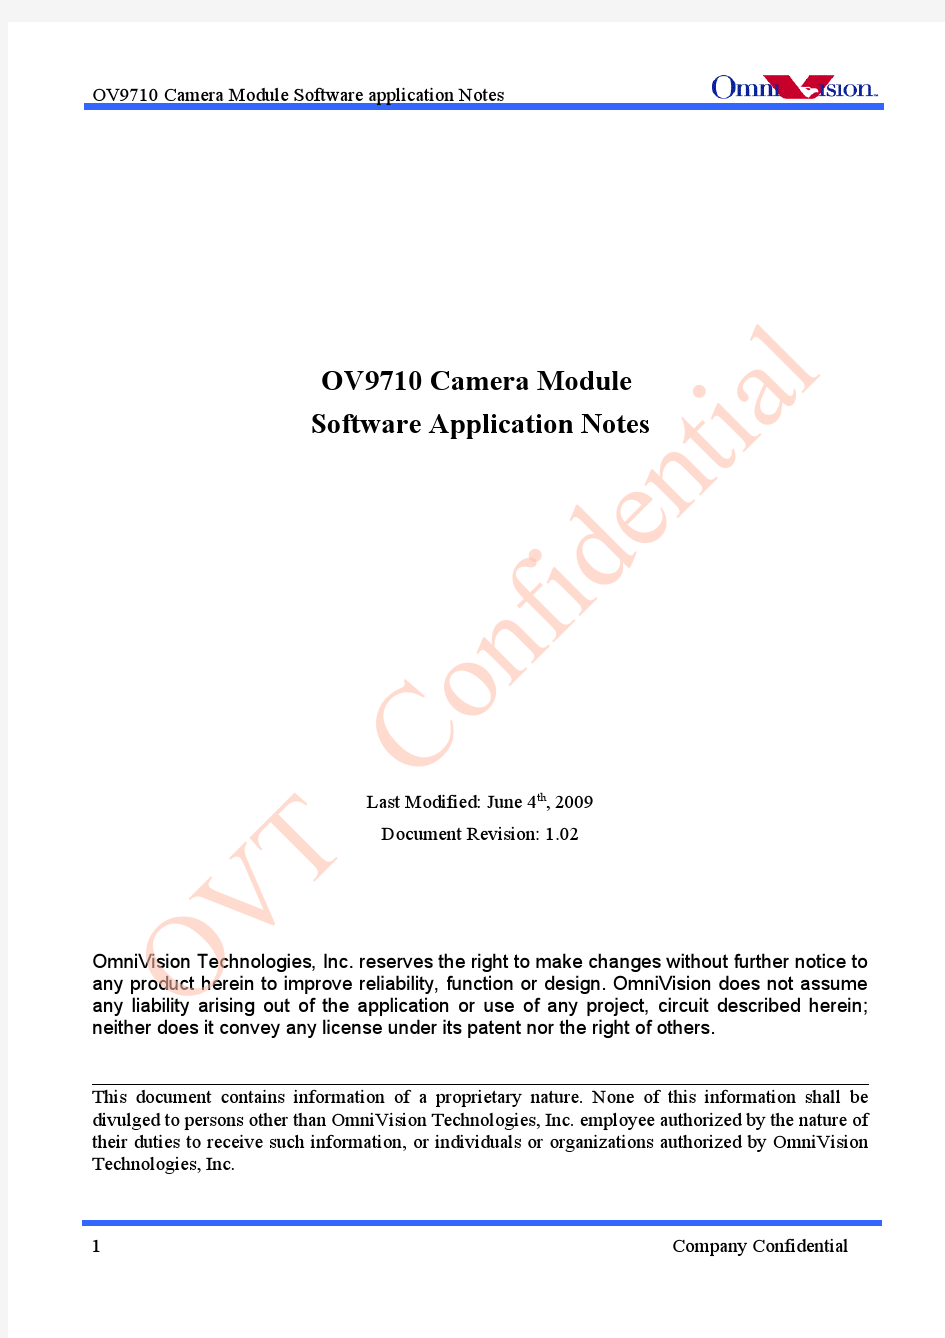 OV9710_OV9712_OV9715 camera module software application notes R1.02 OVT